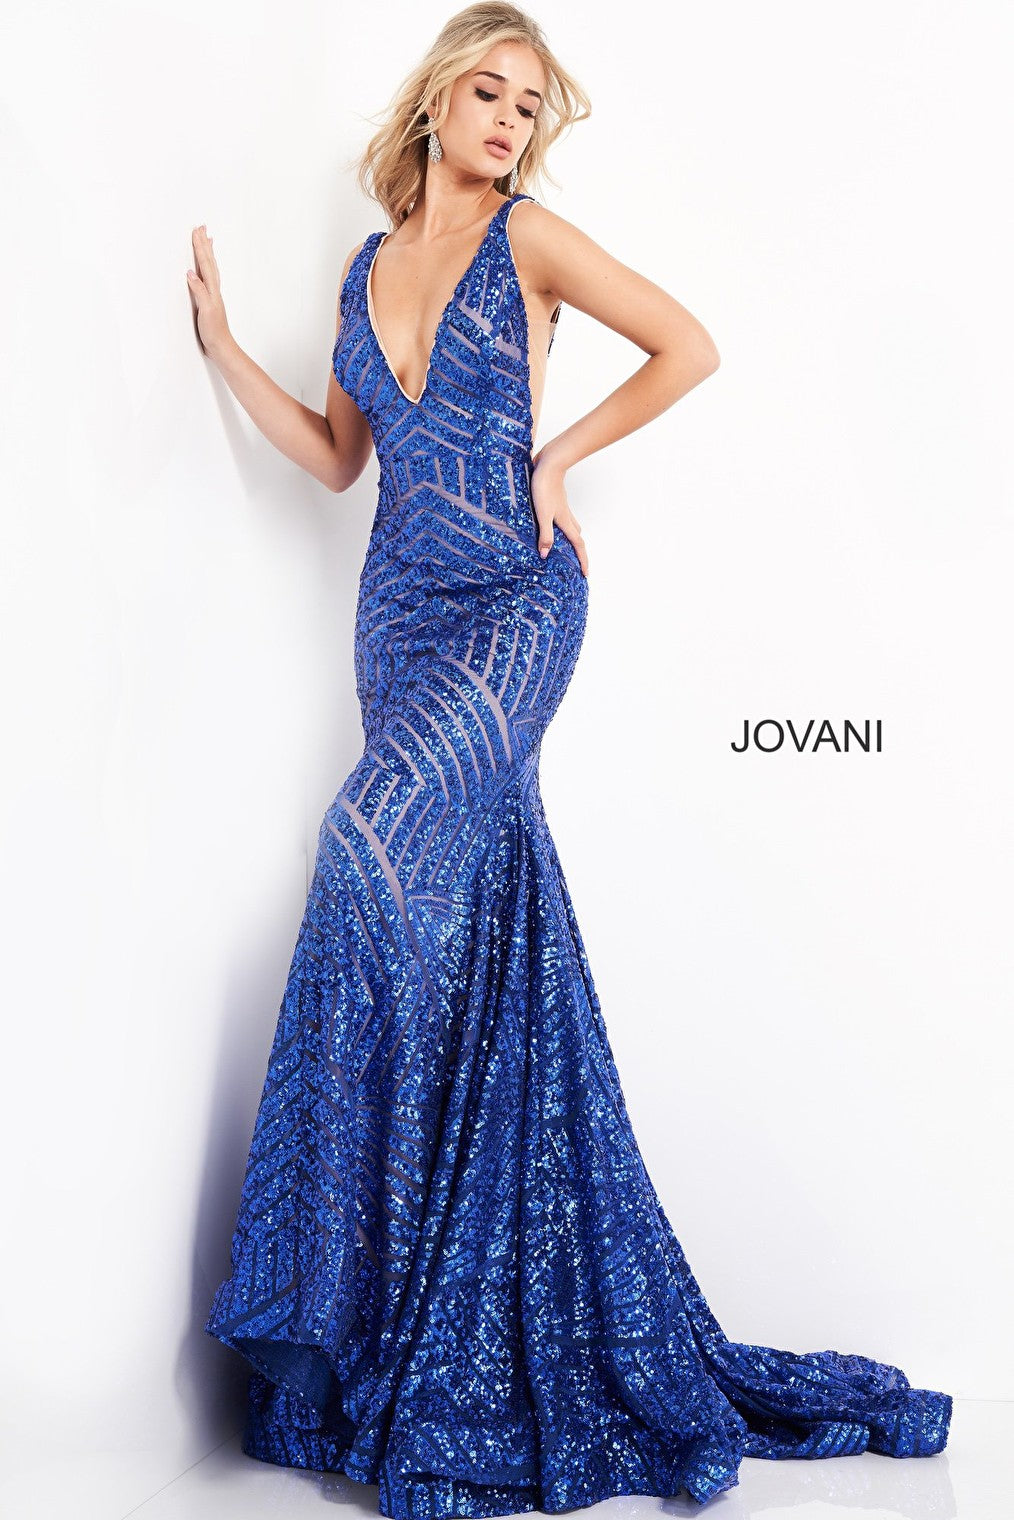 Royal Jovani prom dress 59762 with gtrain